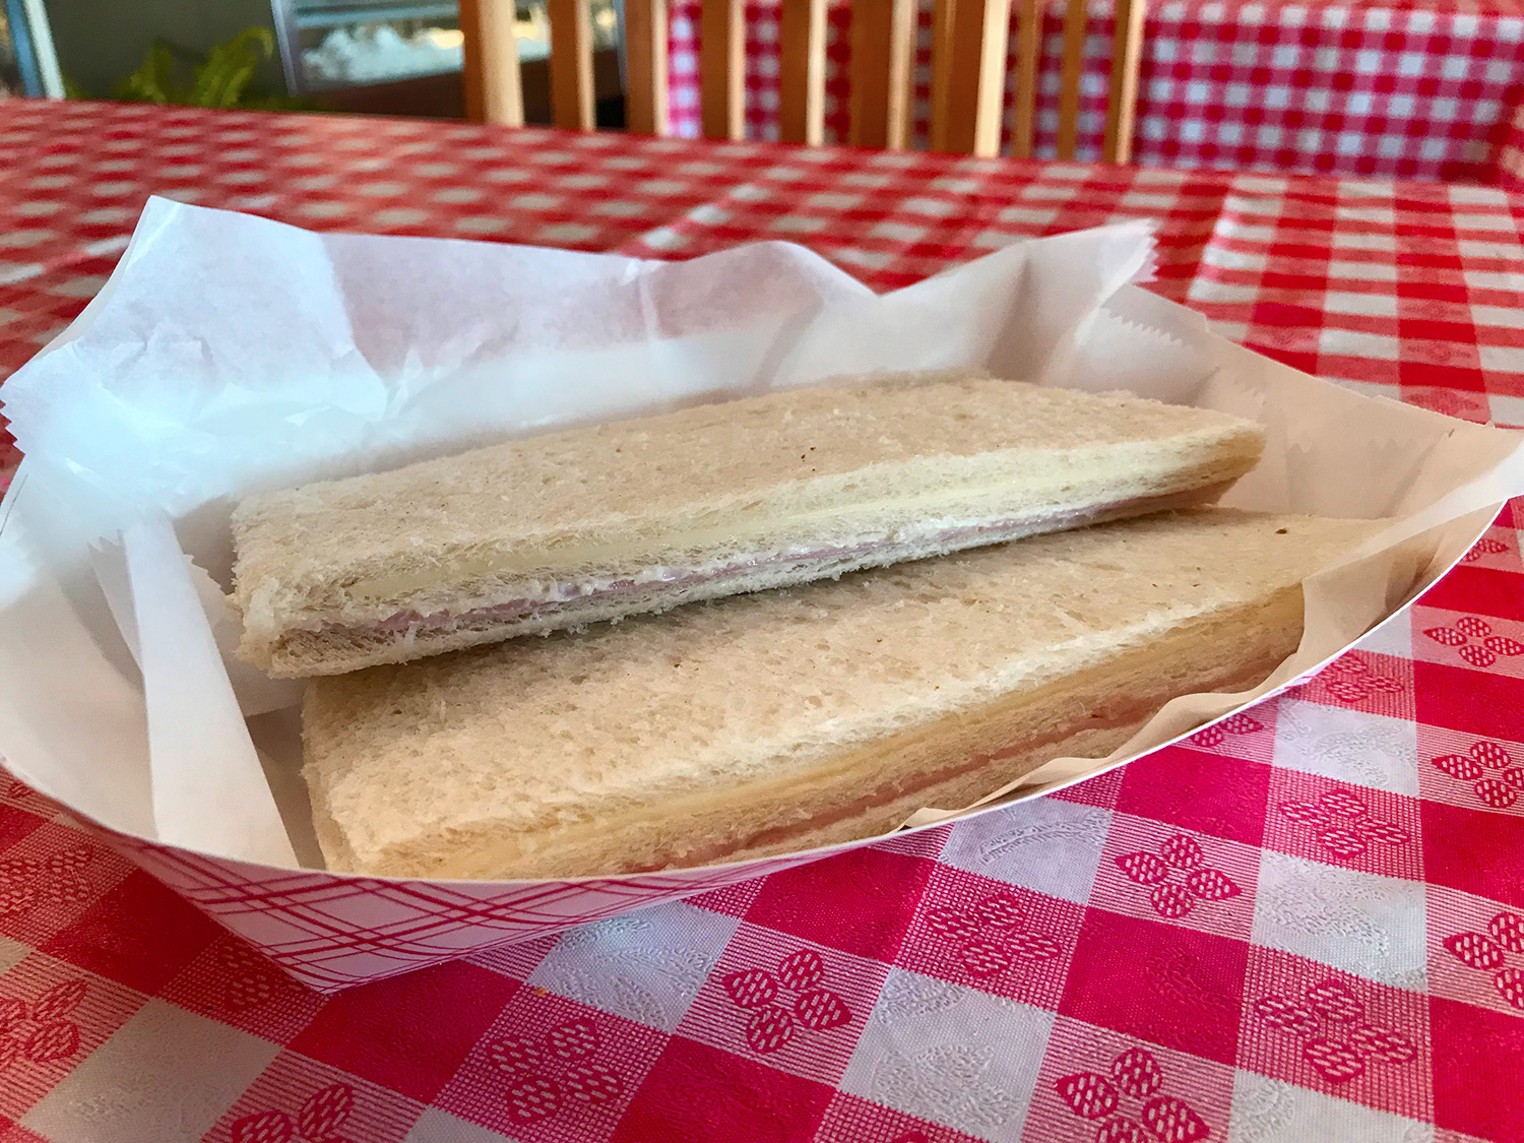 Zee etnisch Snazzy Houston's Best Sandwiches: Jamón y Queso Sandwich de Miga at Manena's |  Houston Press